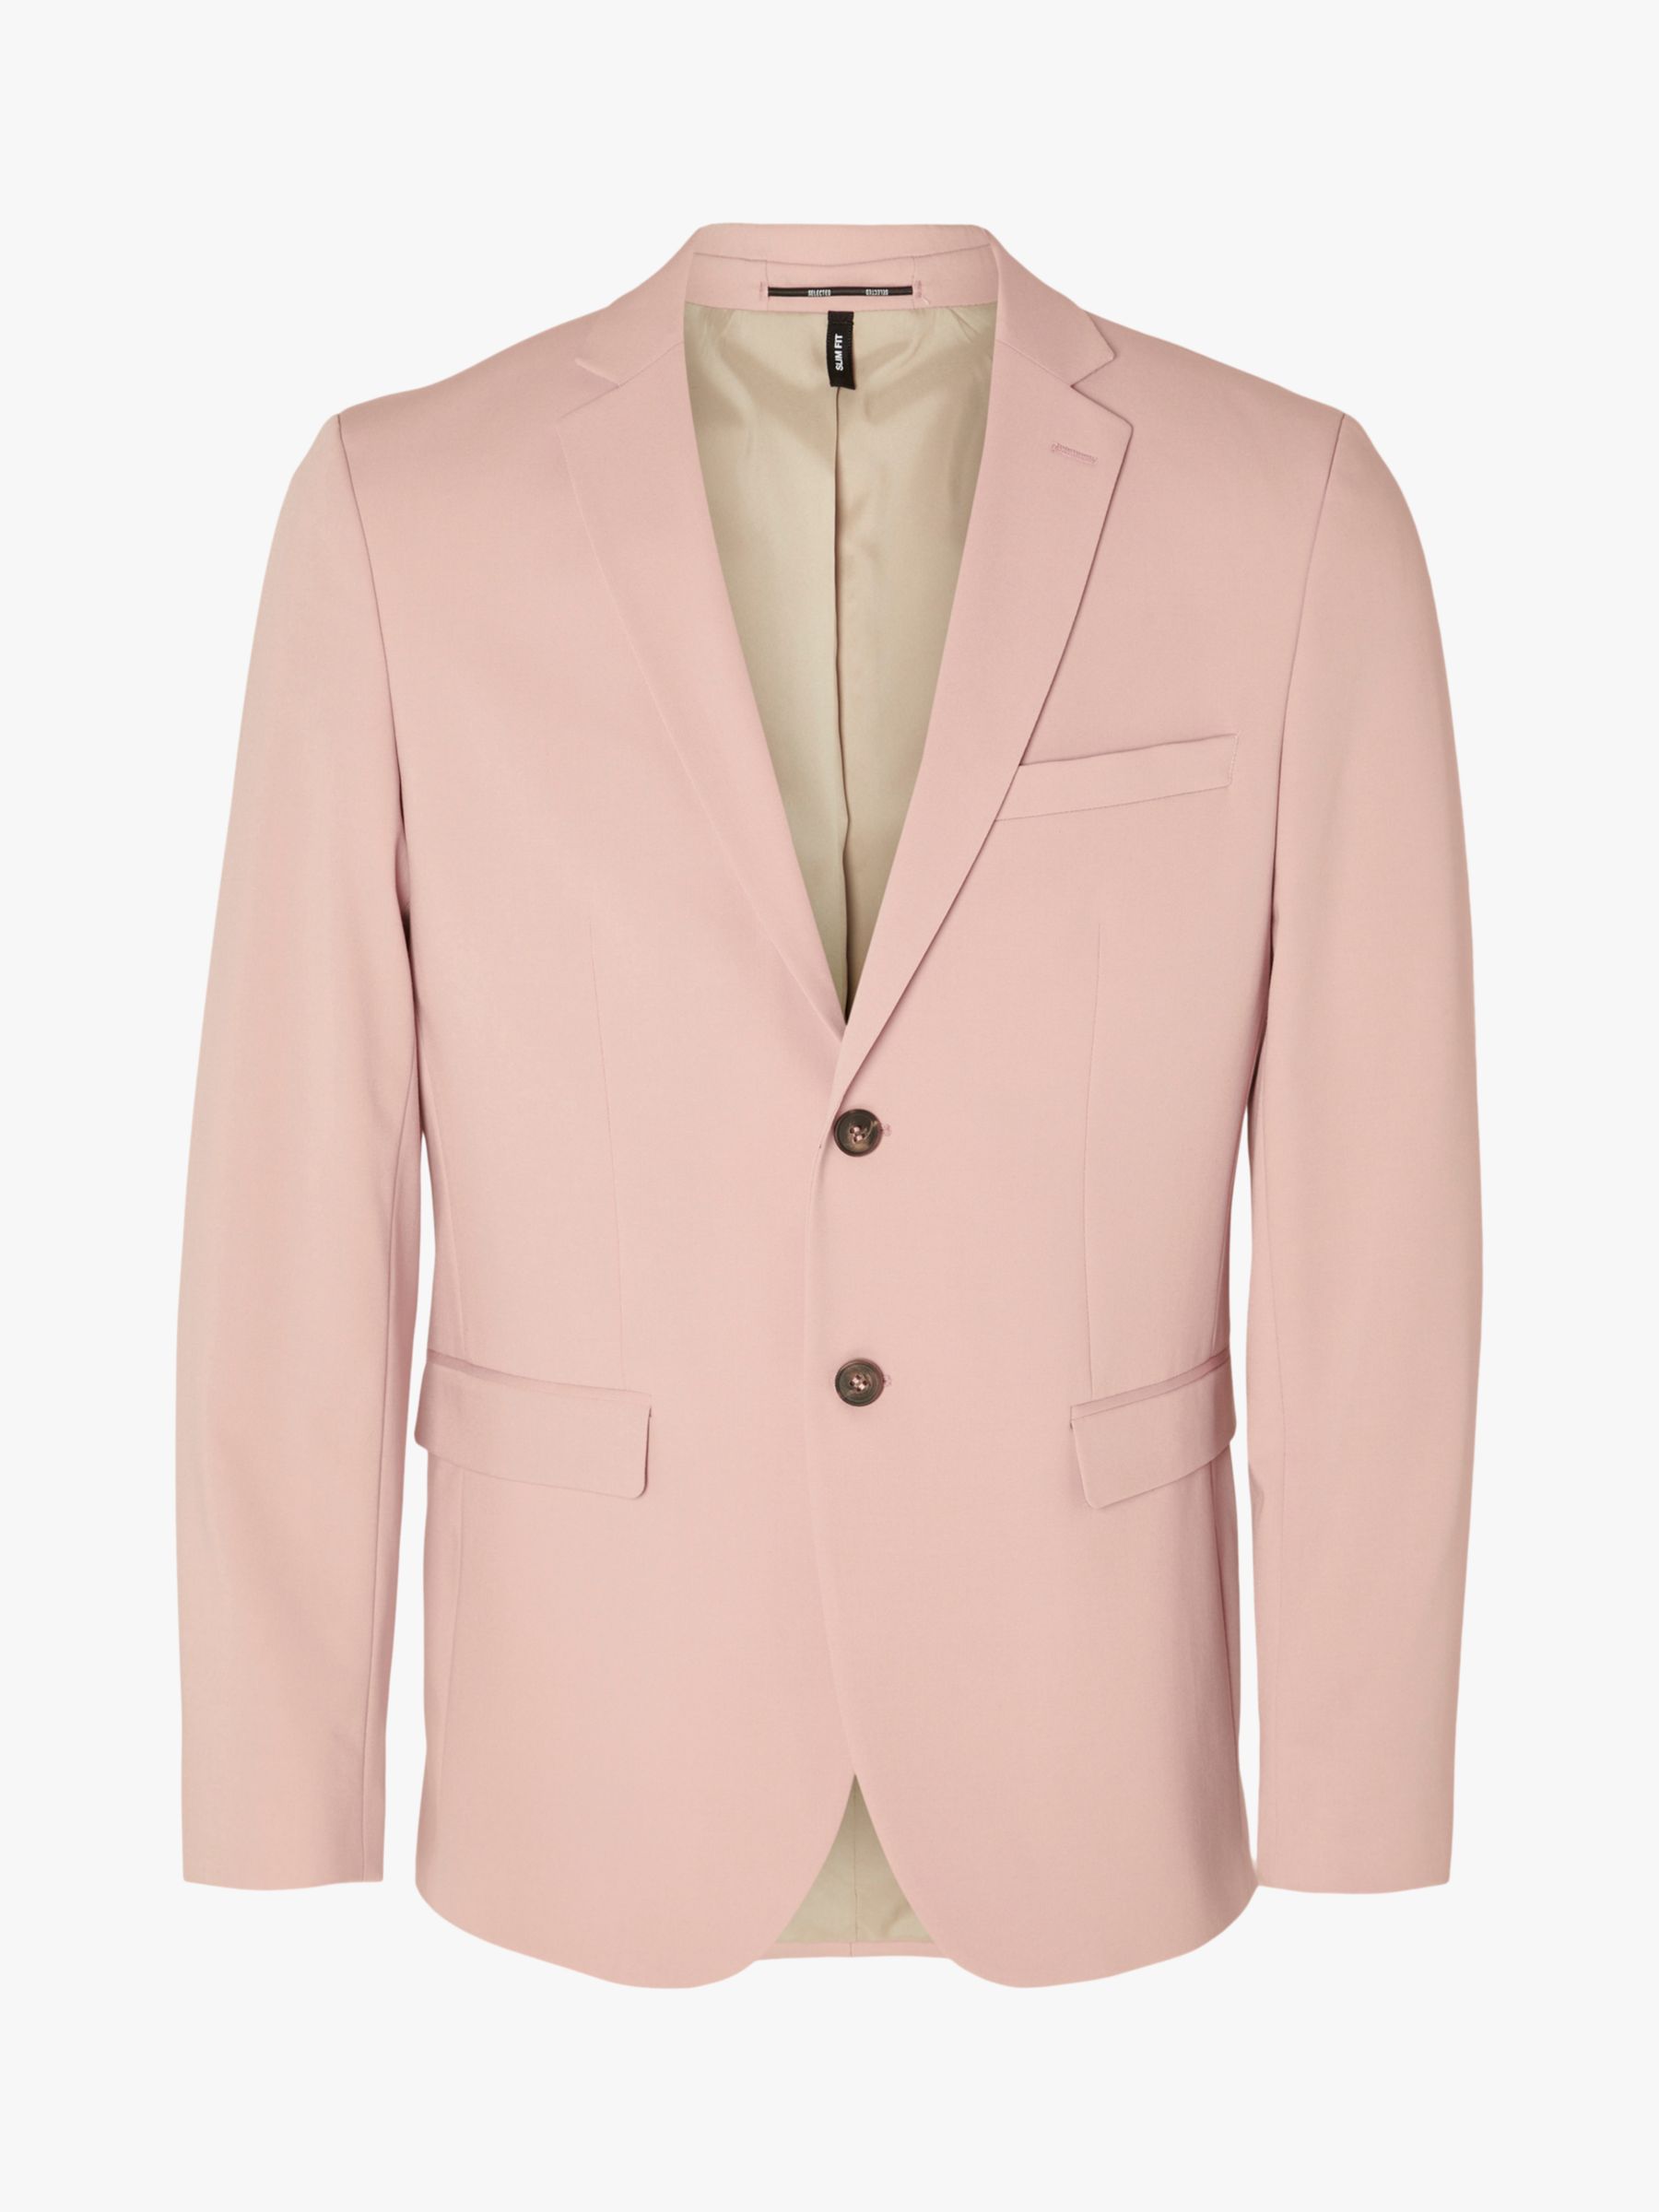 SELECTED HOMME Slim Fit Suit Jacket, Pink at John Lewis & Partners